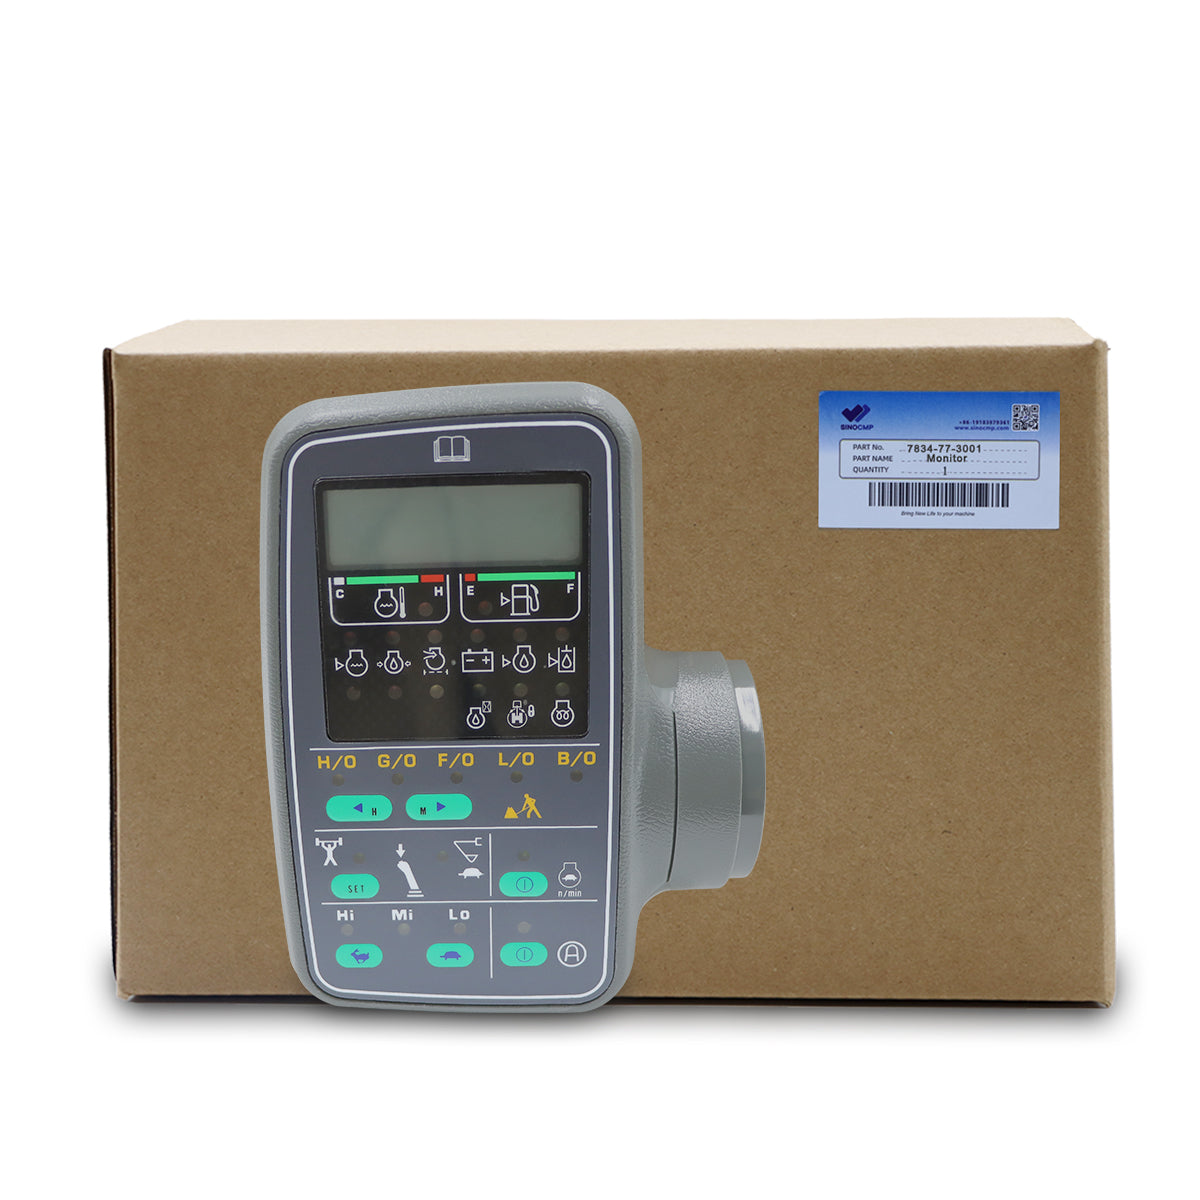 7834-77-3001 Monitor Display Panel for Komatsu Excavator PC300-6 PC200-6 PC400-6 - Sinocmp